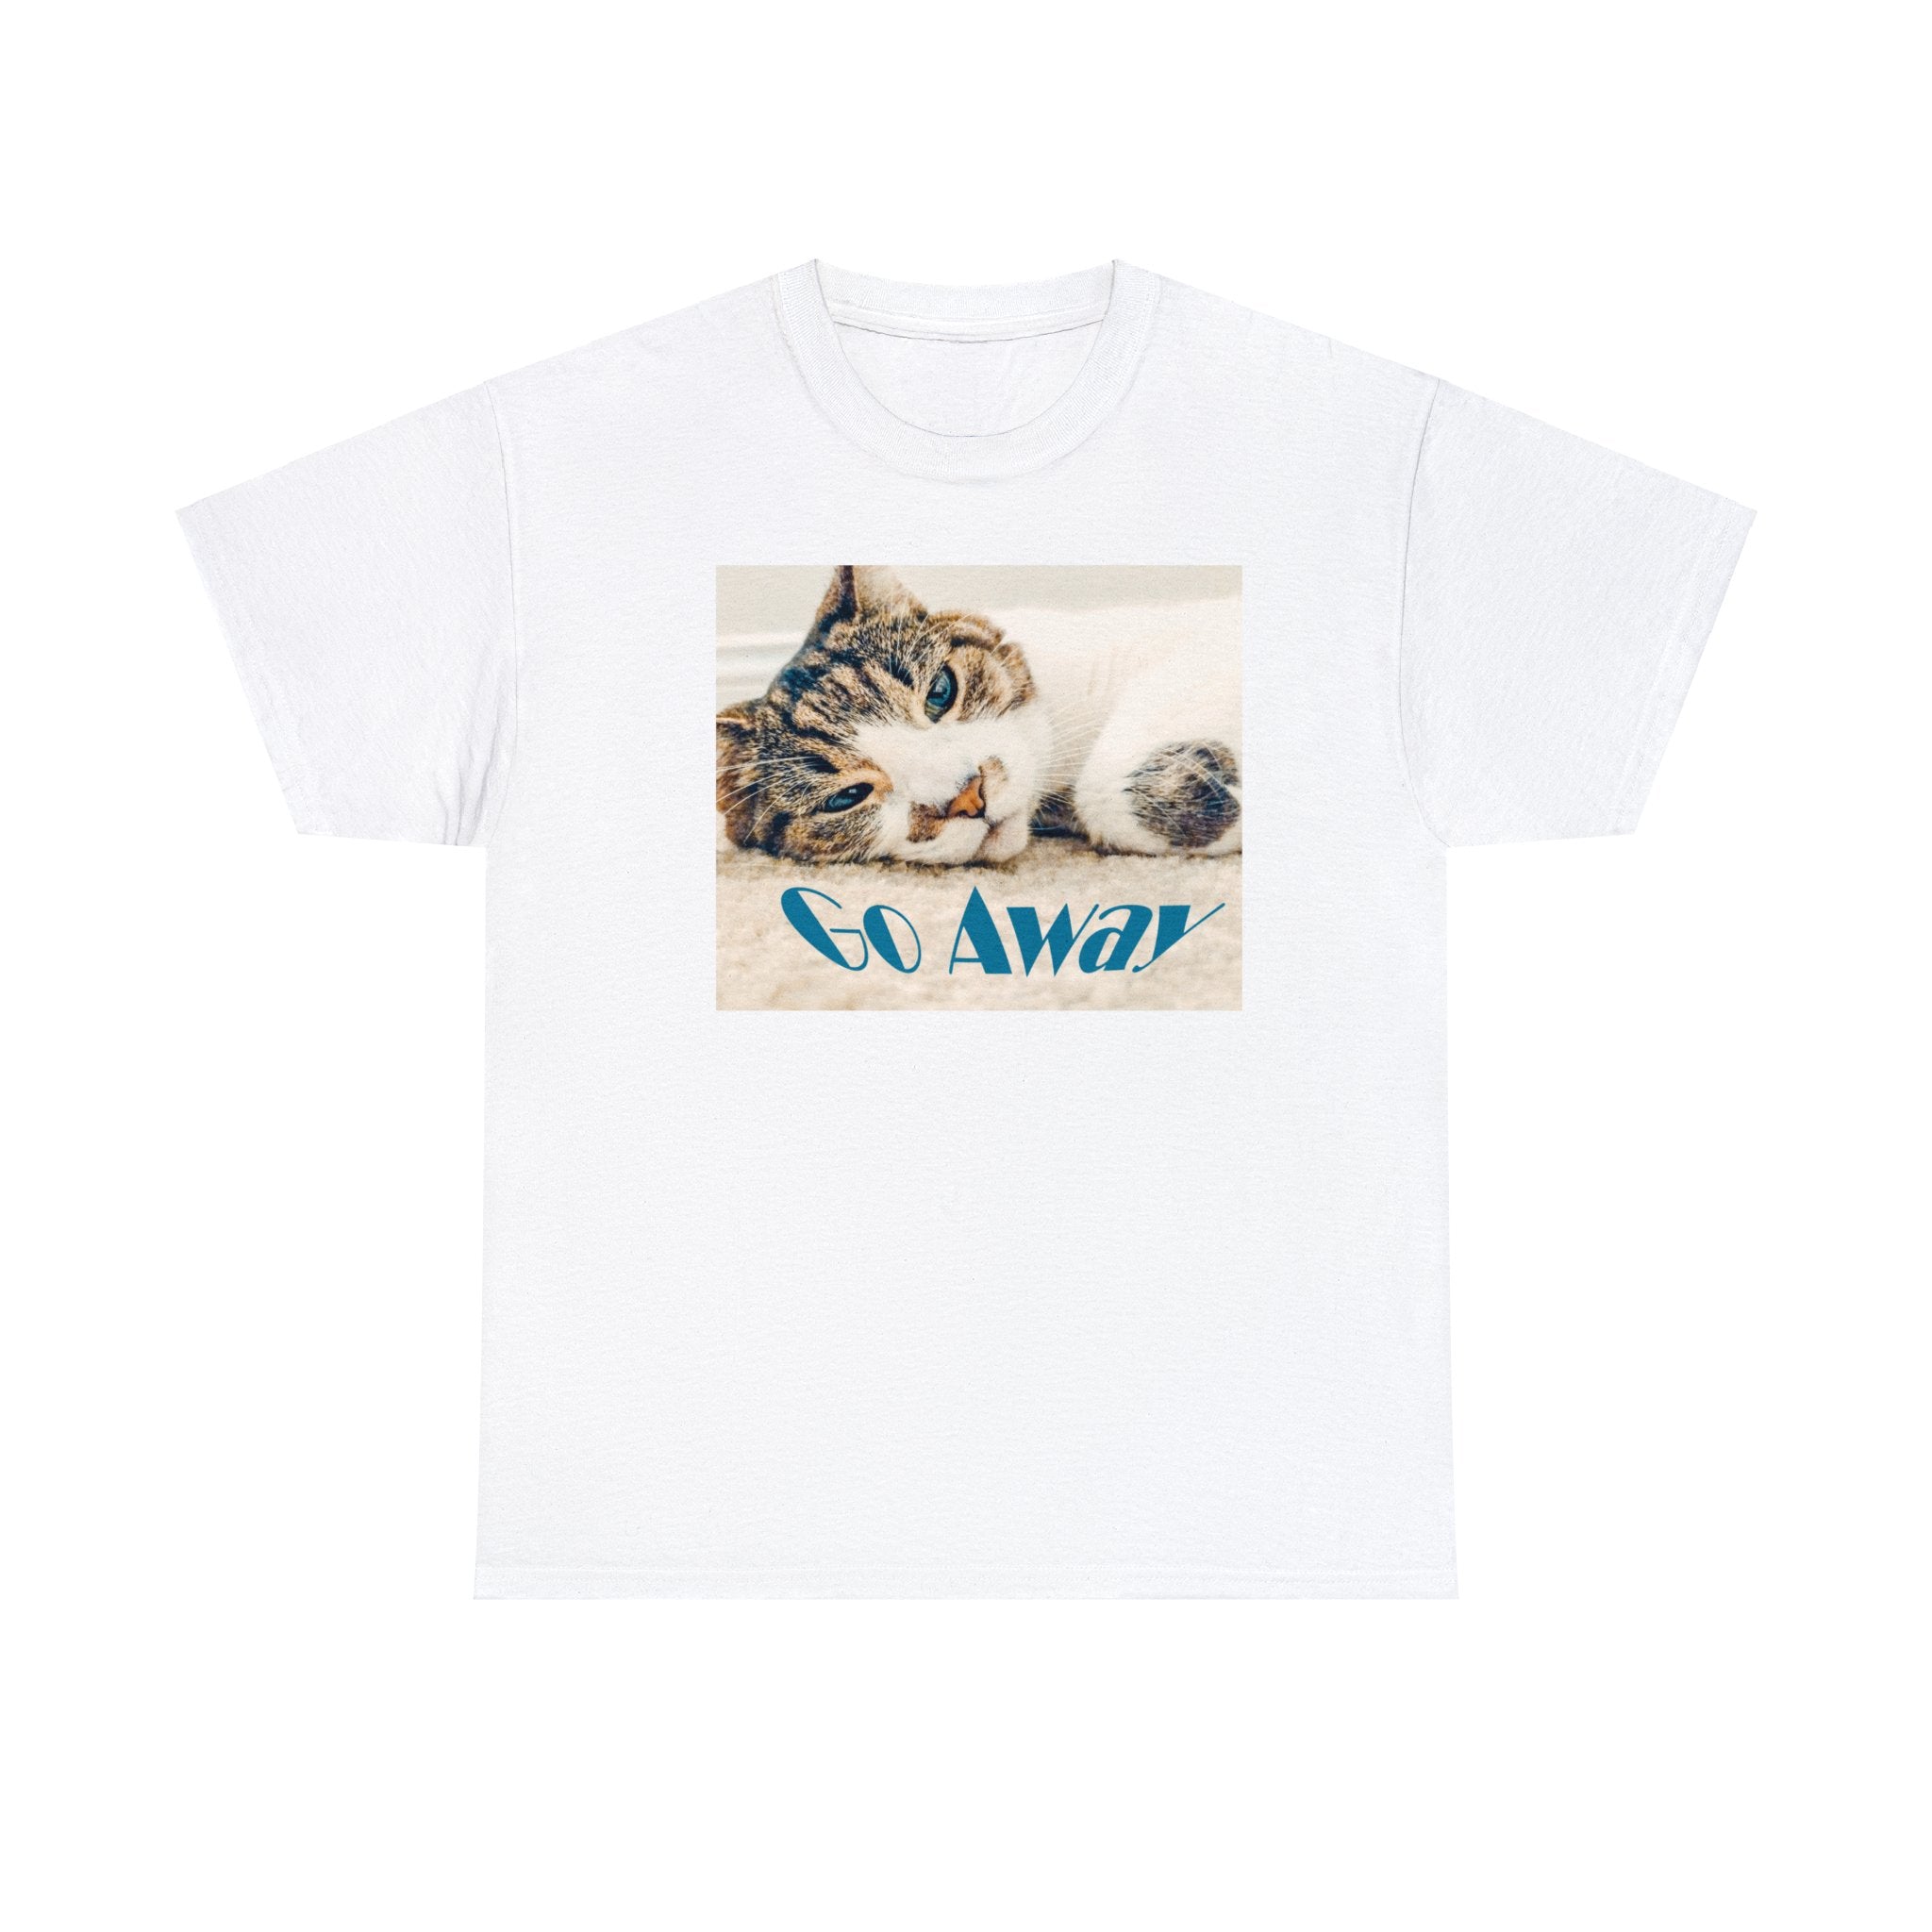 Sleepy Cat dit Go Away T-shirt unisexe en coton lourd jusqu'à 5XL